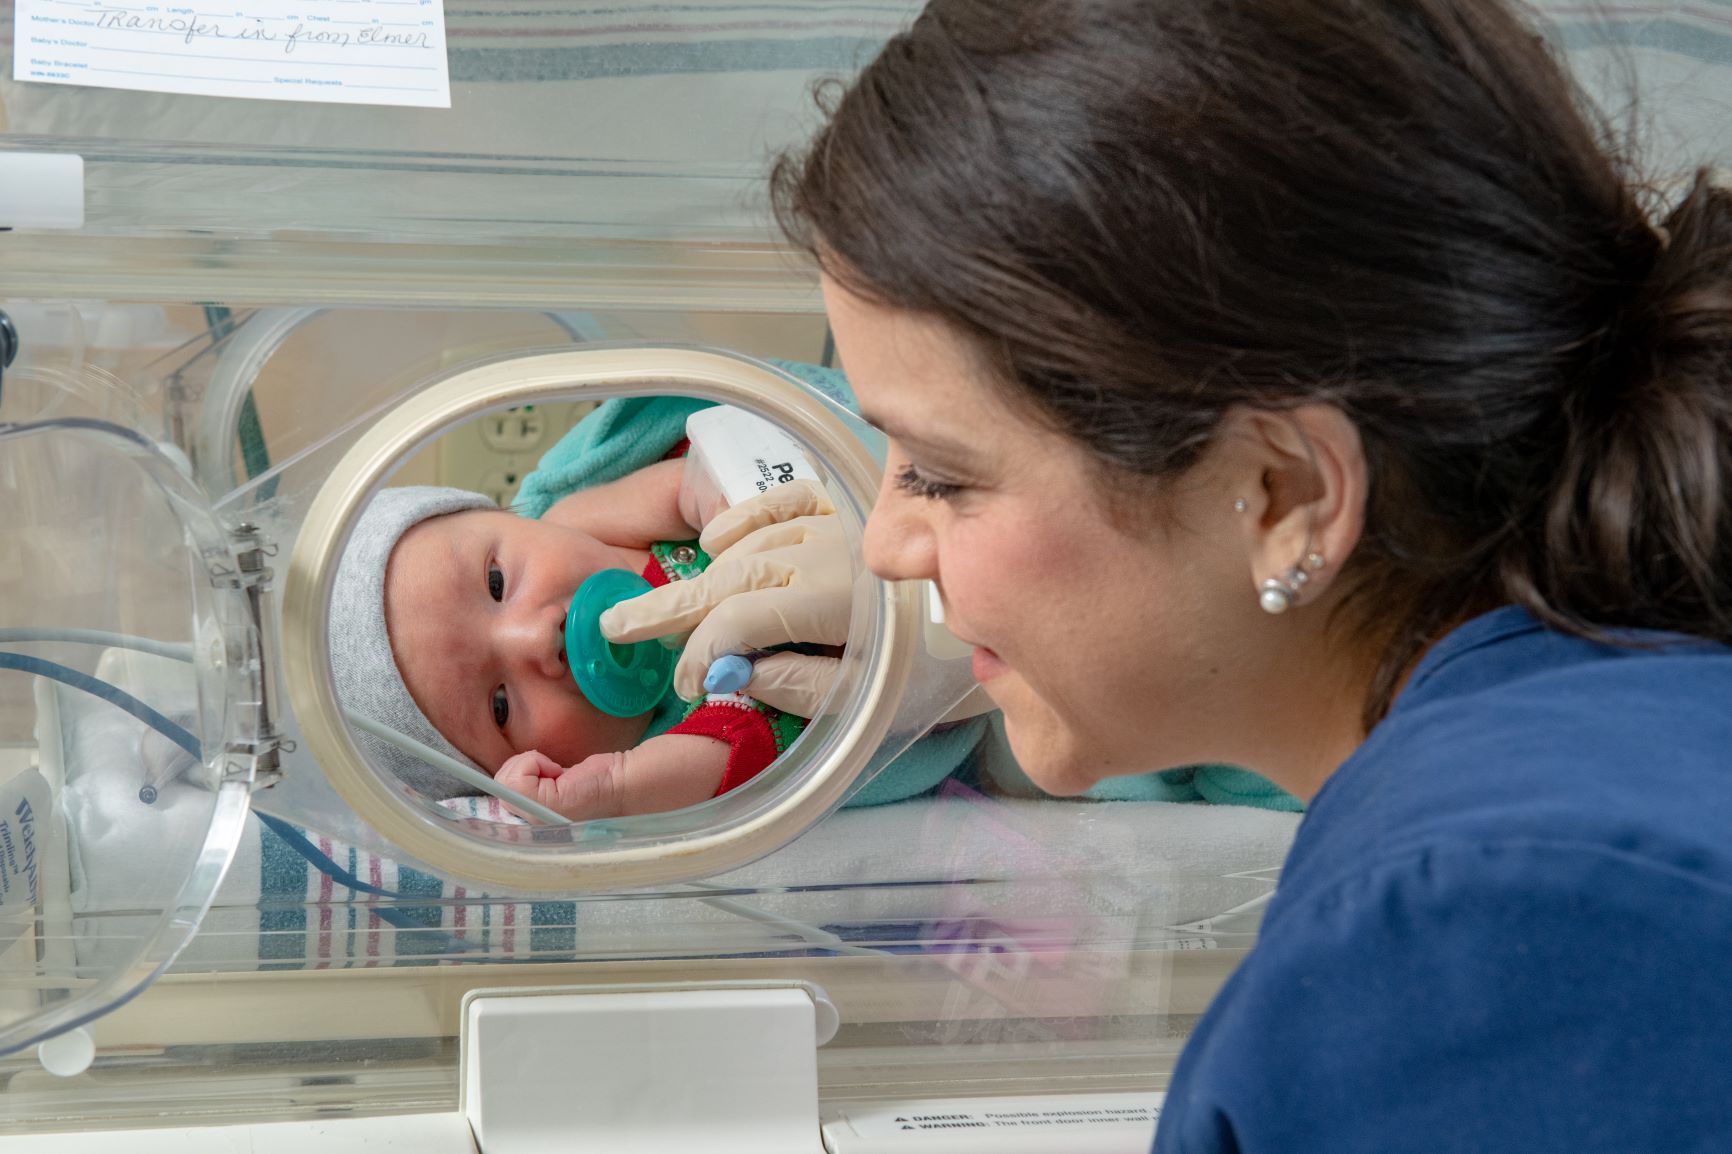 nicu baby in incubator with nurse